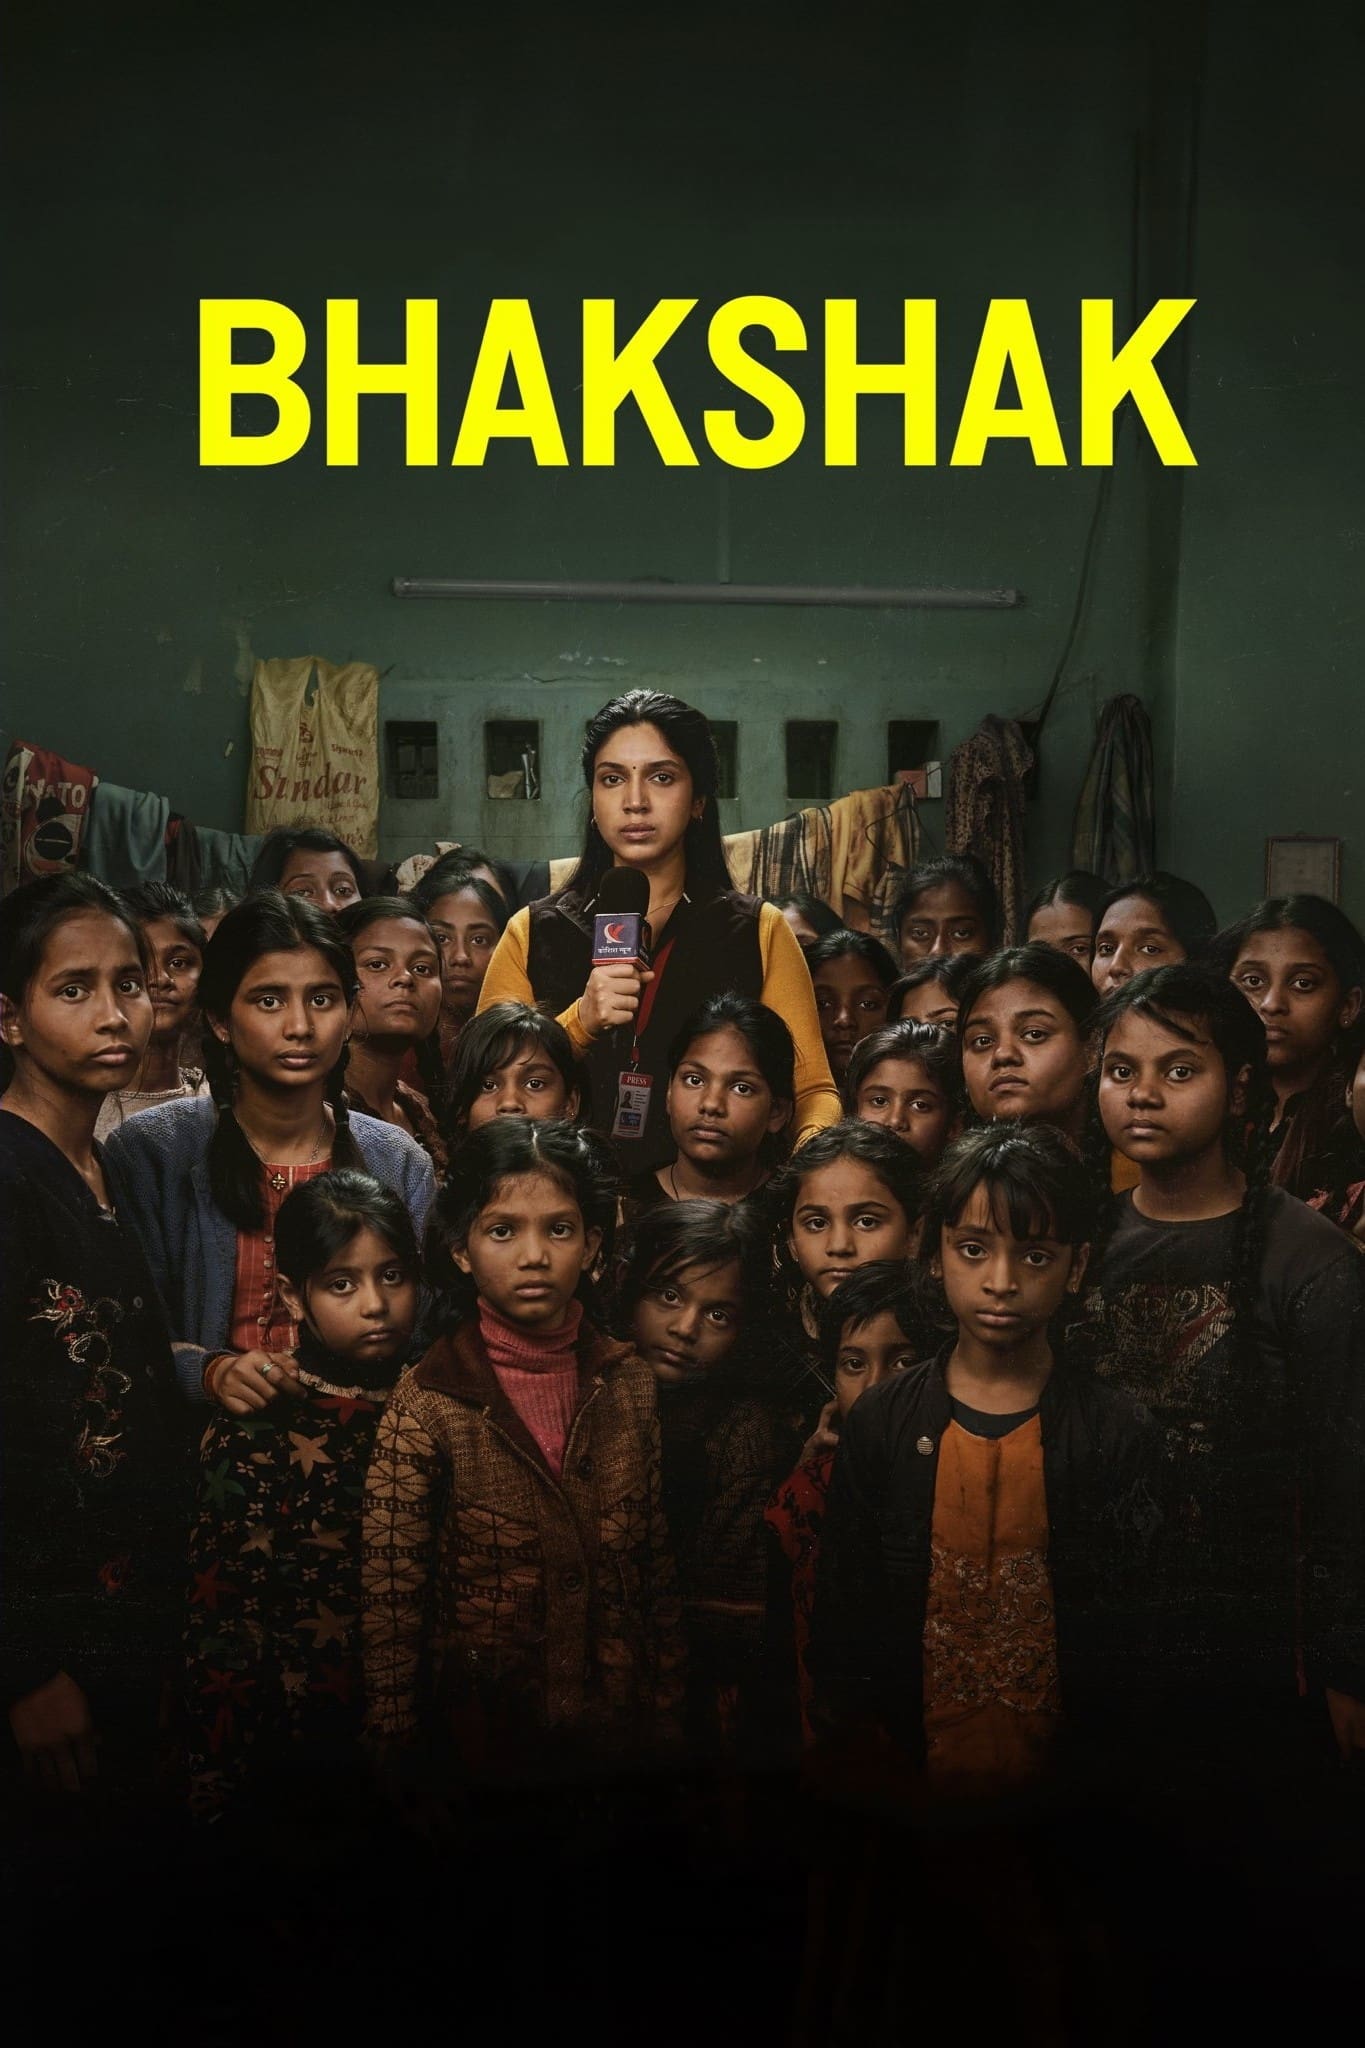 Image for movie Bhakshak